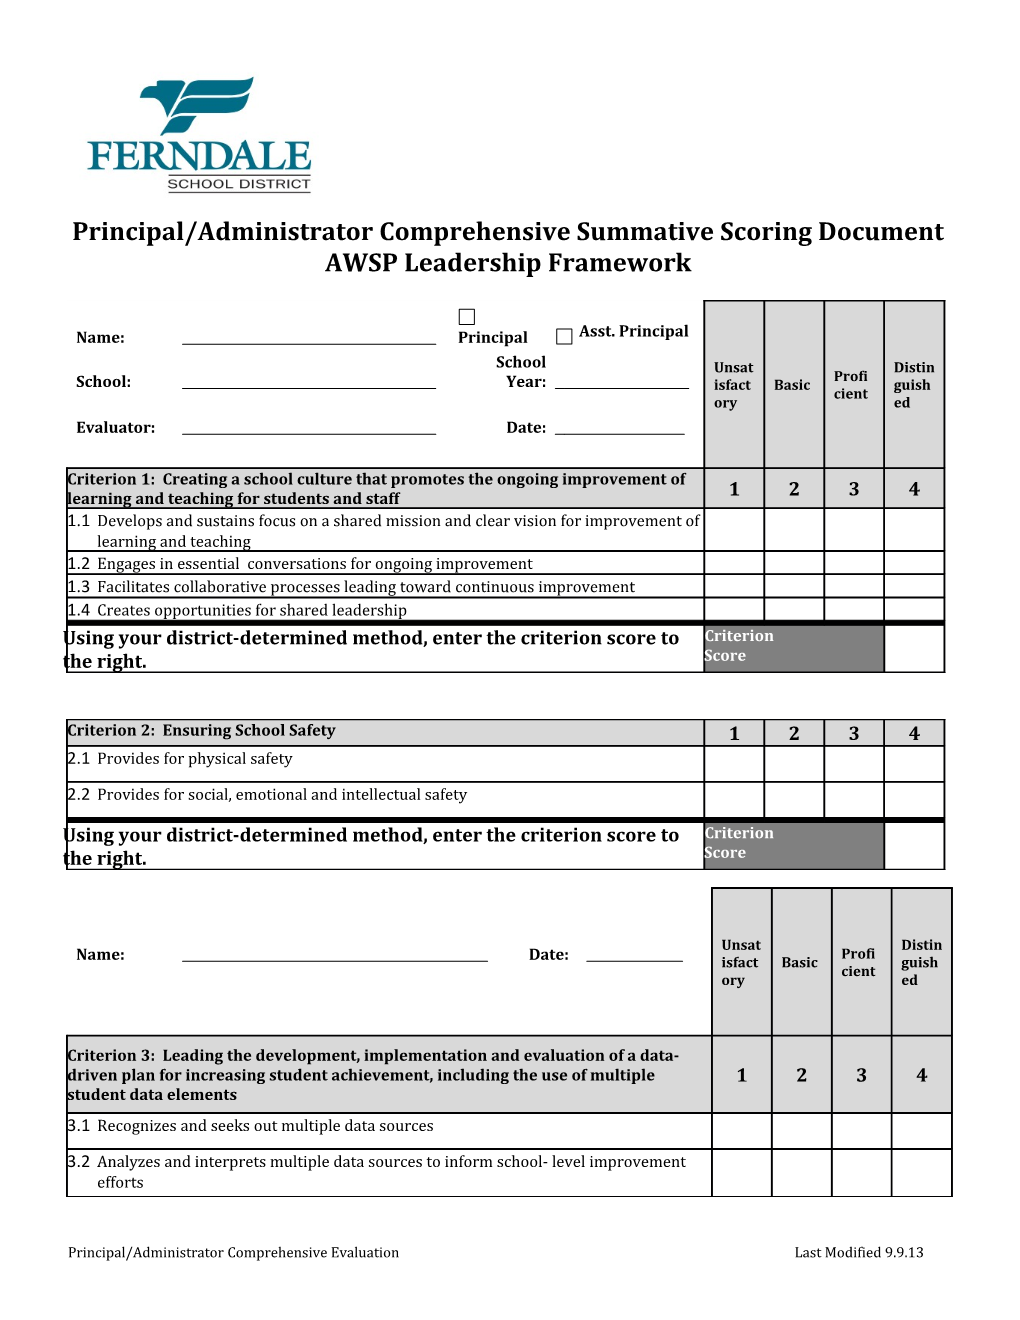 Principal/Administratorcomprehensive Summative Scoring Document